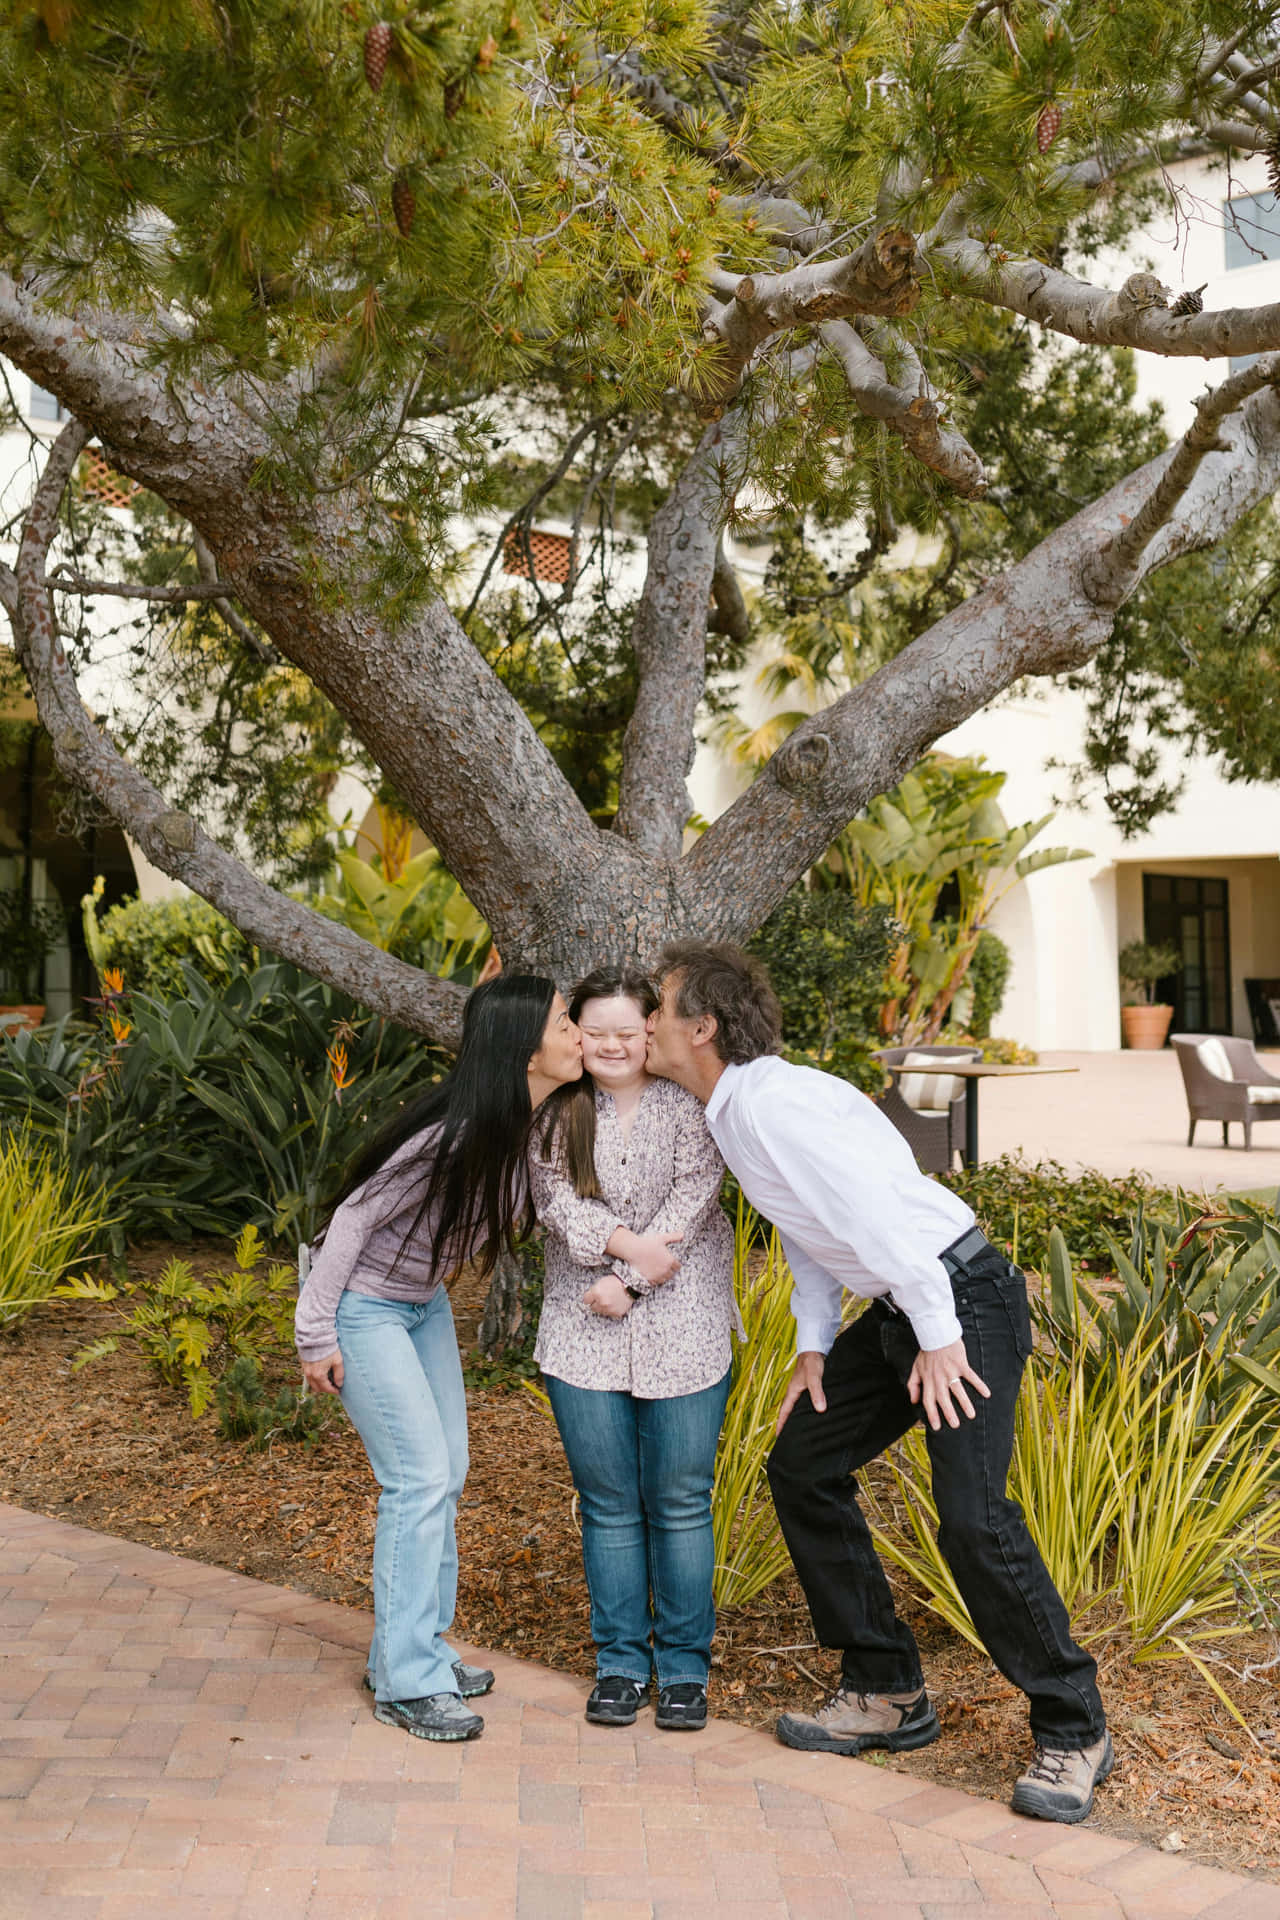 Family Kiss Under Pine Tree Wallpaper